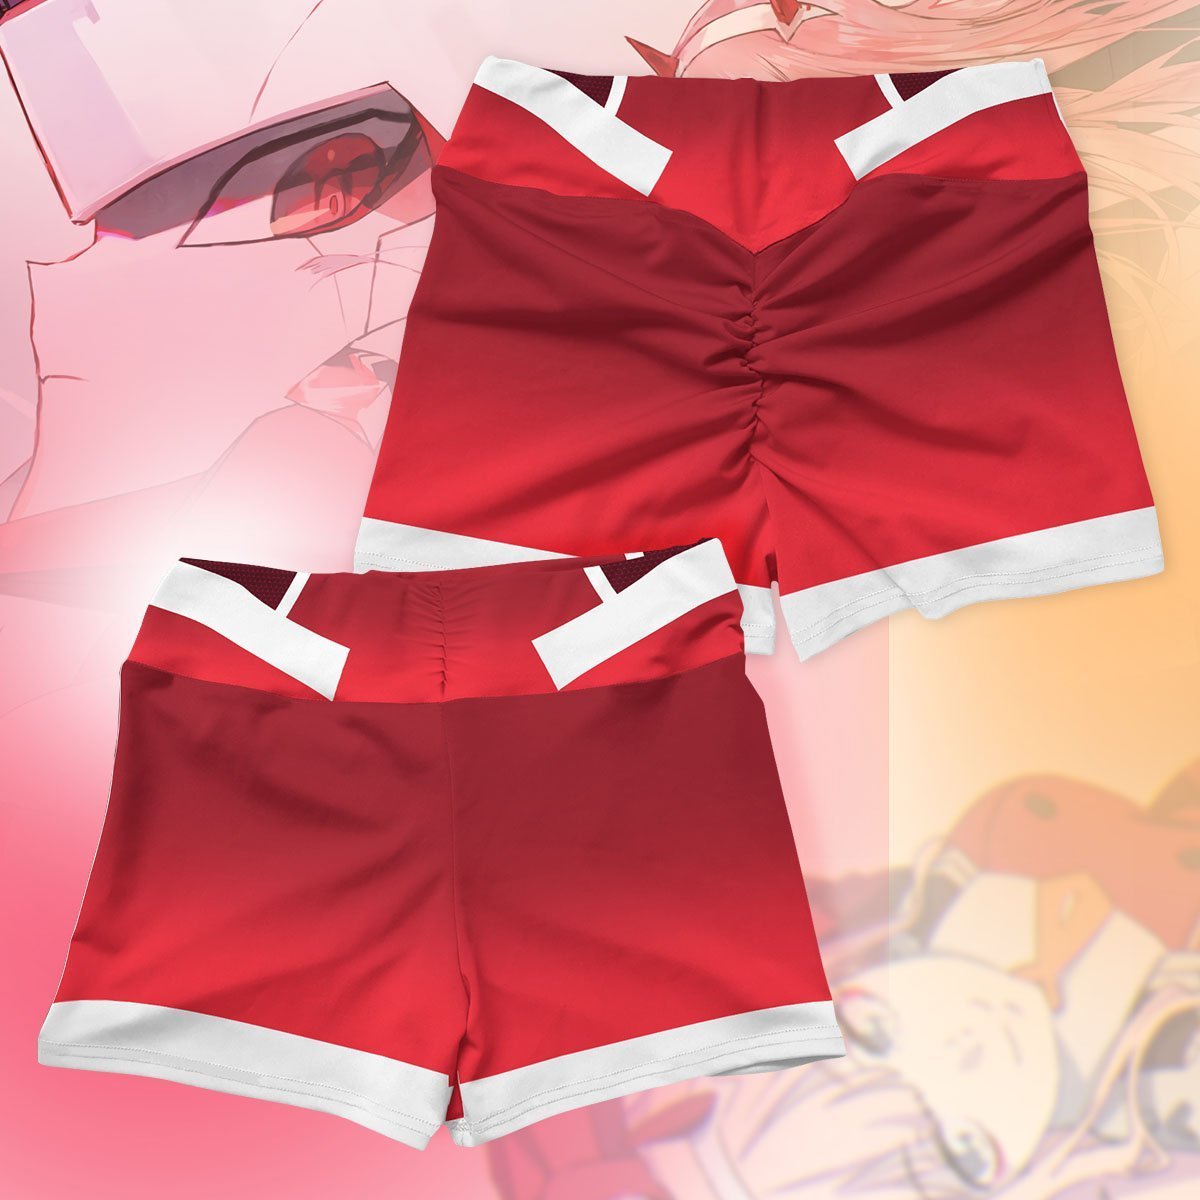 zero two armor suit active wear set 770121 - Anime Swimsuits